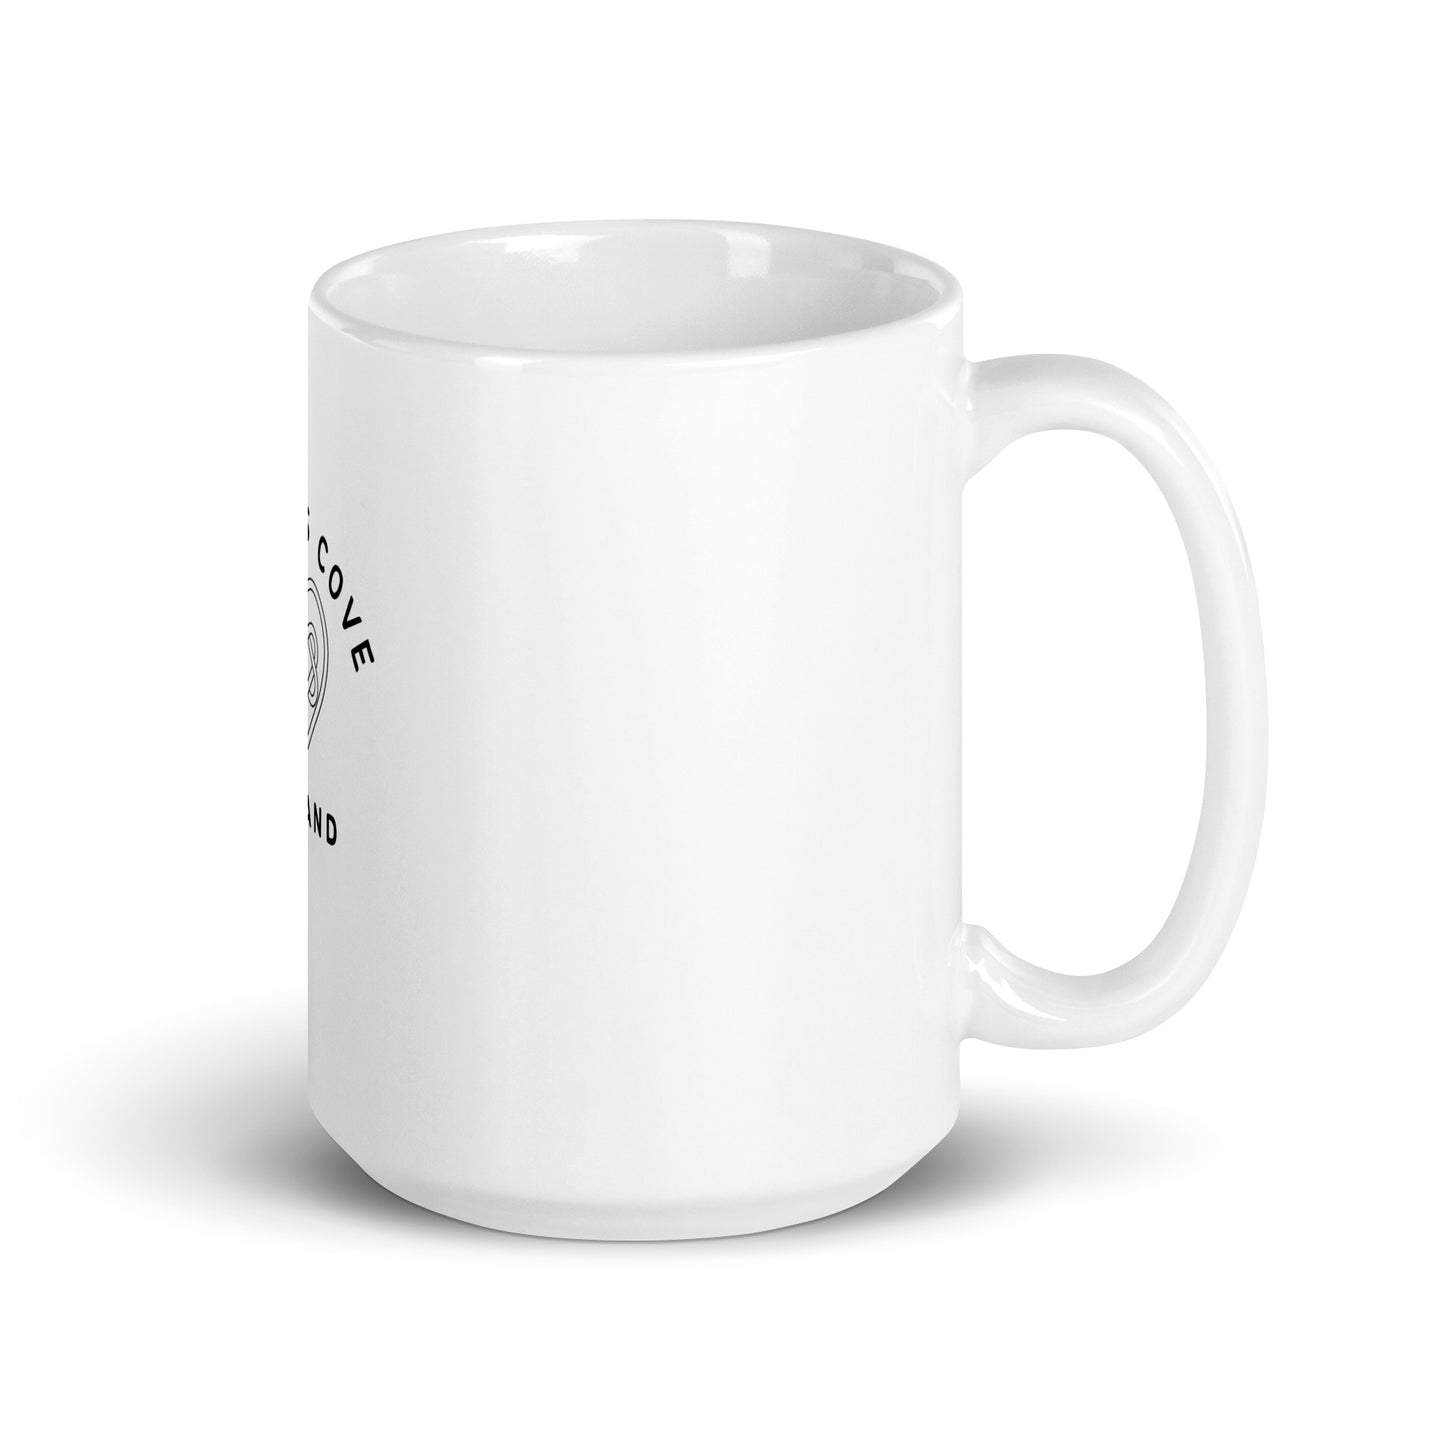 Grace's Cove White glossy mug